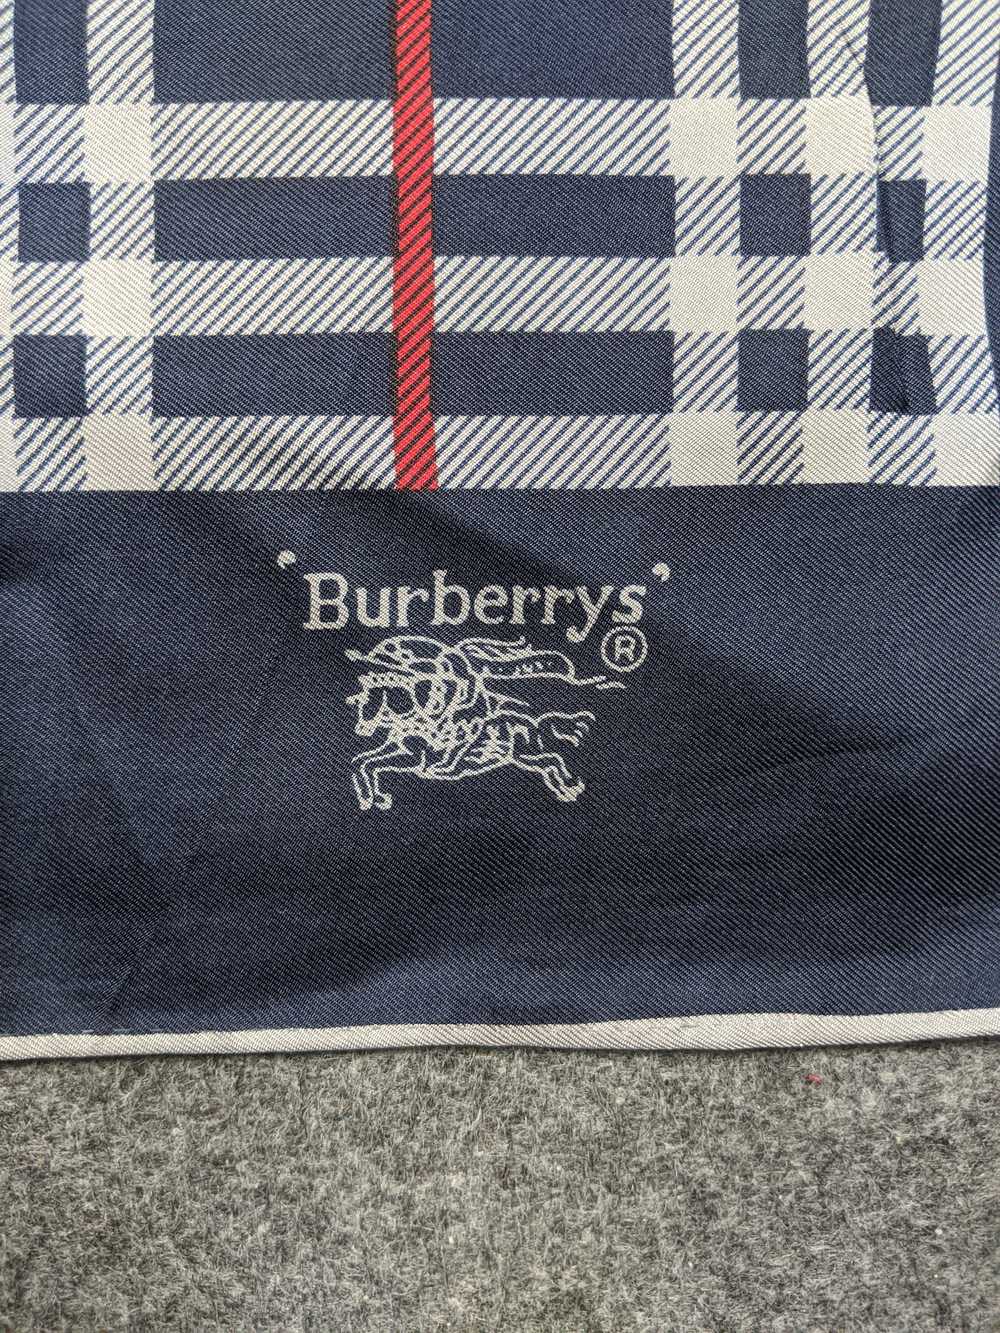 Burberry Prorsum Burberrys Checkered Silk Scarf - image 3